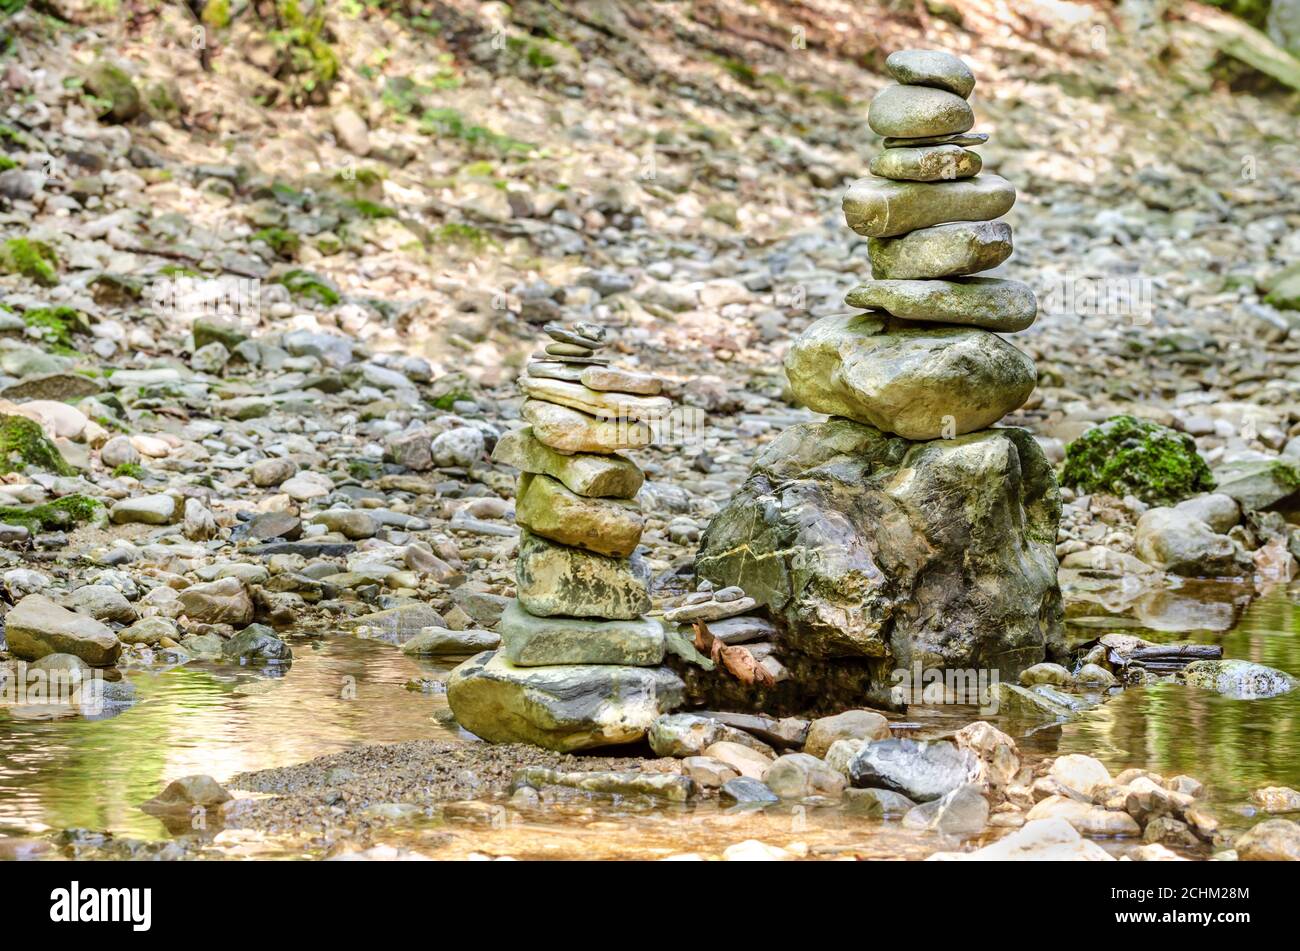 Rock Balancing. Zwei Stapel gestapelter Felsen in einem Flussbett. Felsen lagen flach aufeinander zu großer Höhe. Ausgewogene Felsen am Bach. Stockfoto